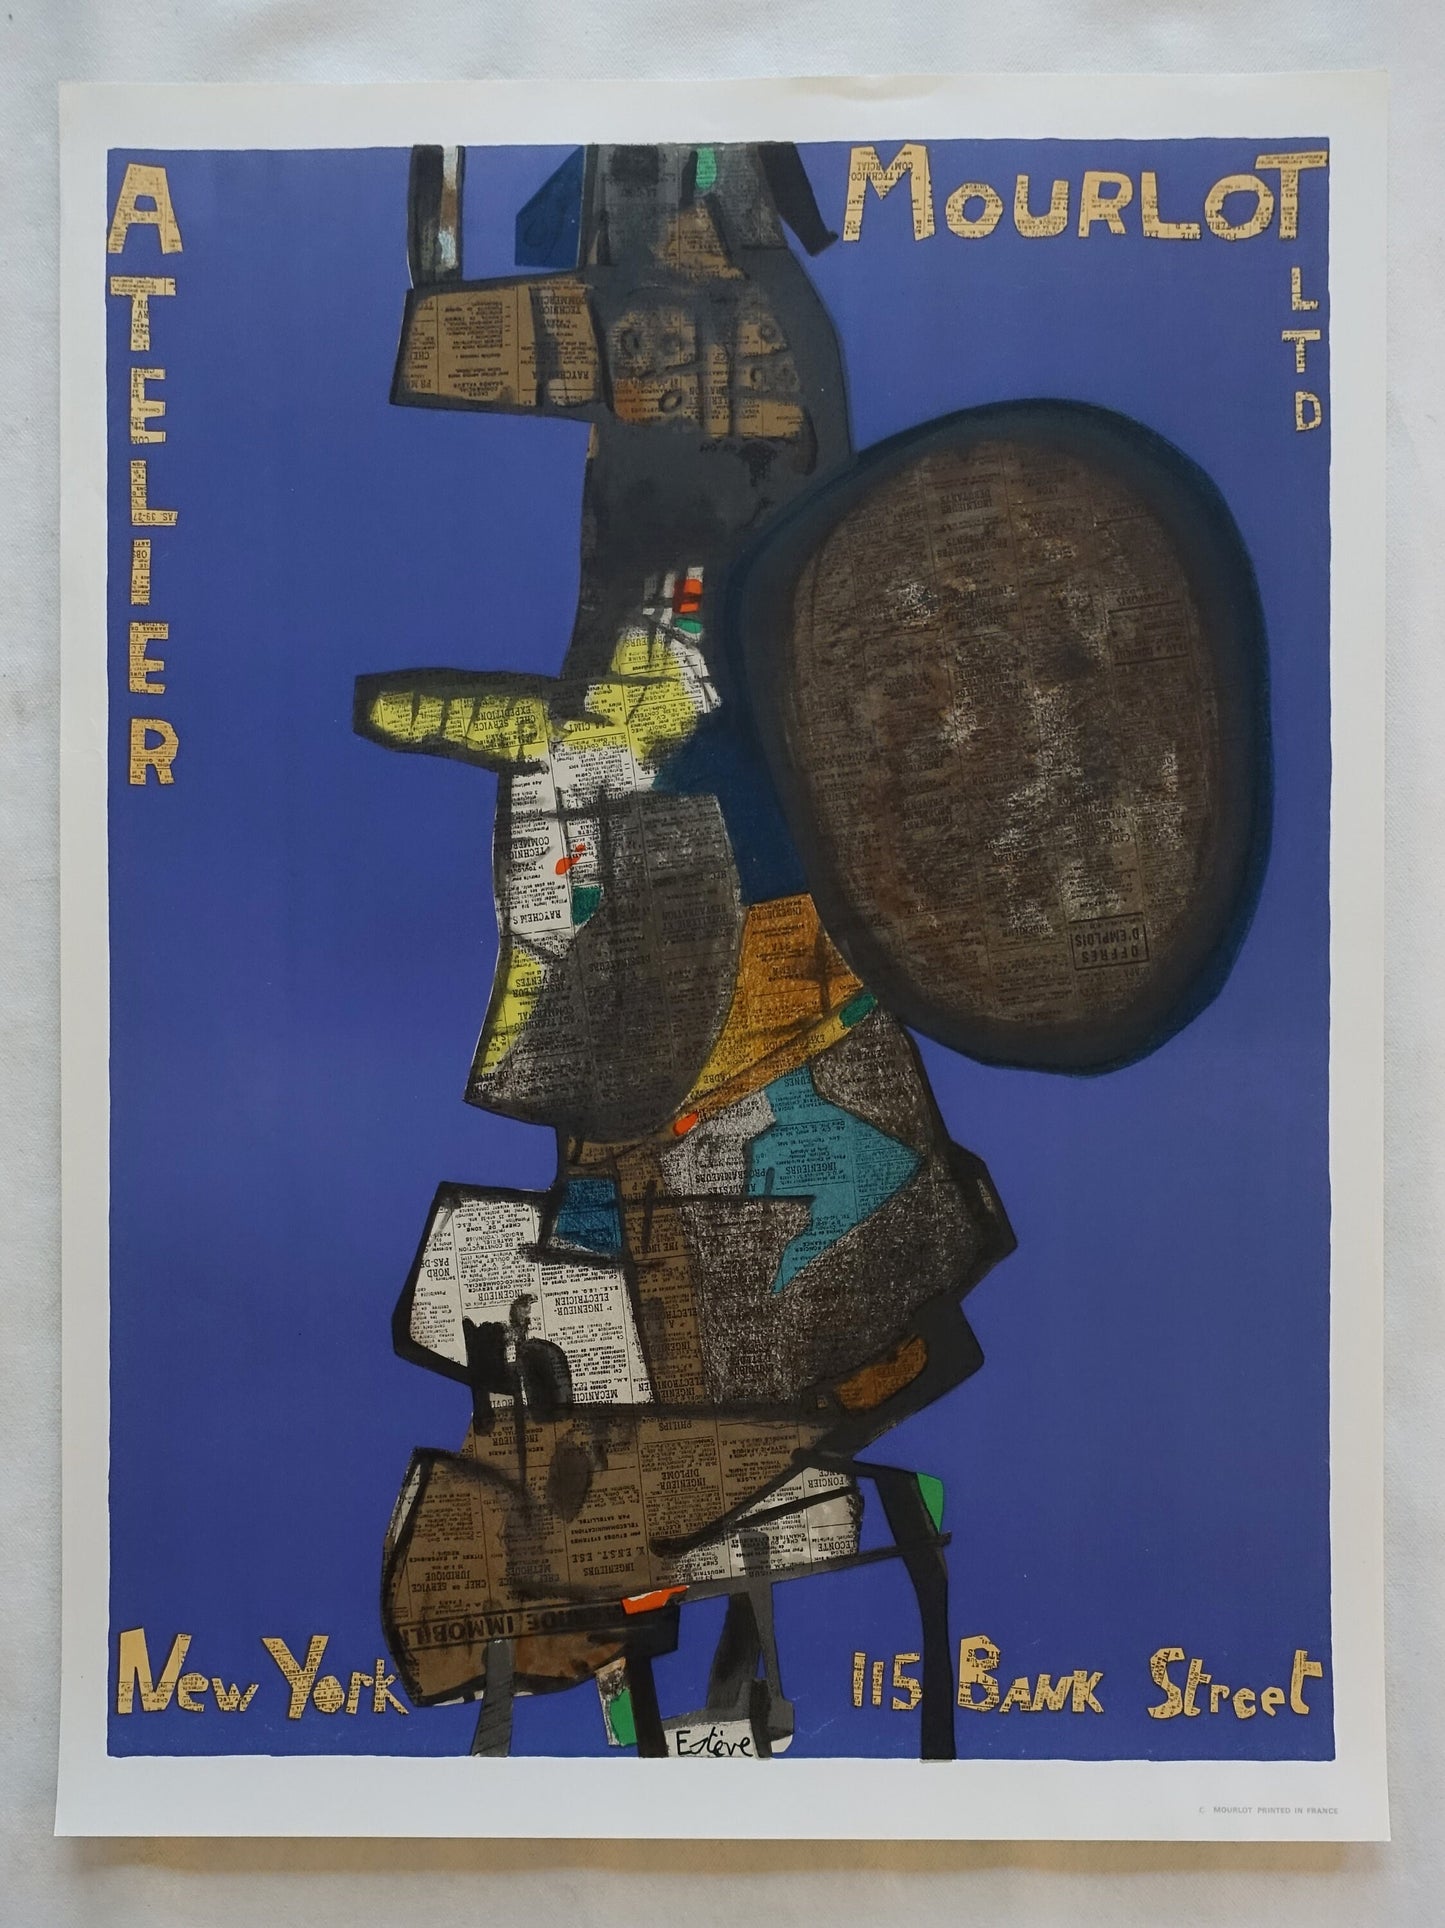 1967 Atelier Mourlot - New York by Maurice Estève - Original Vintage Poster